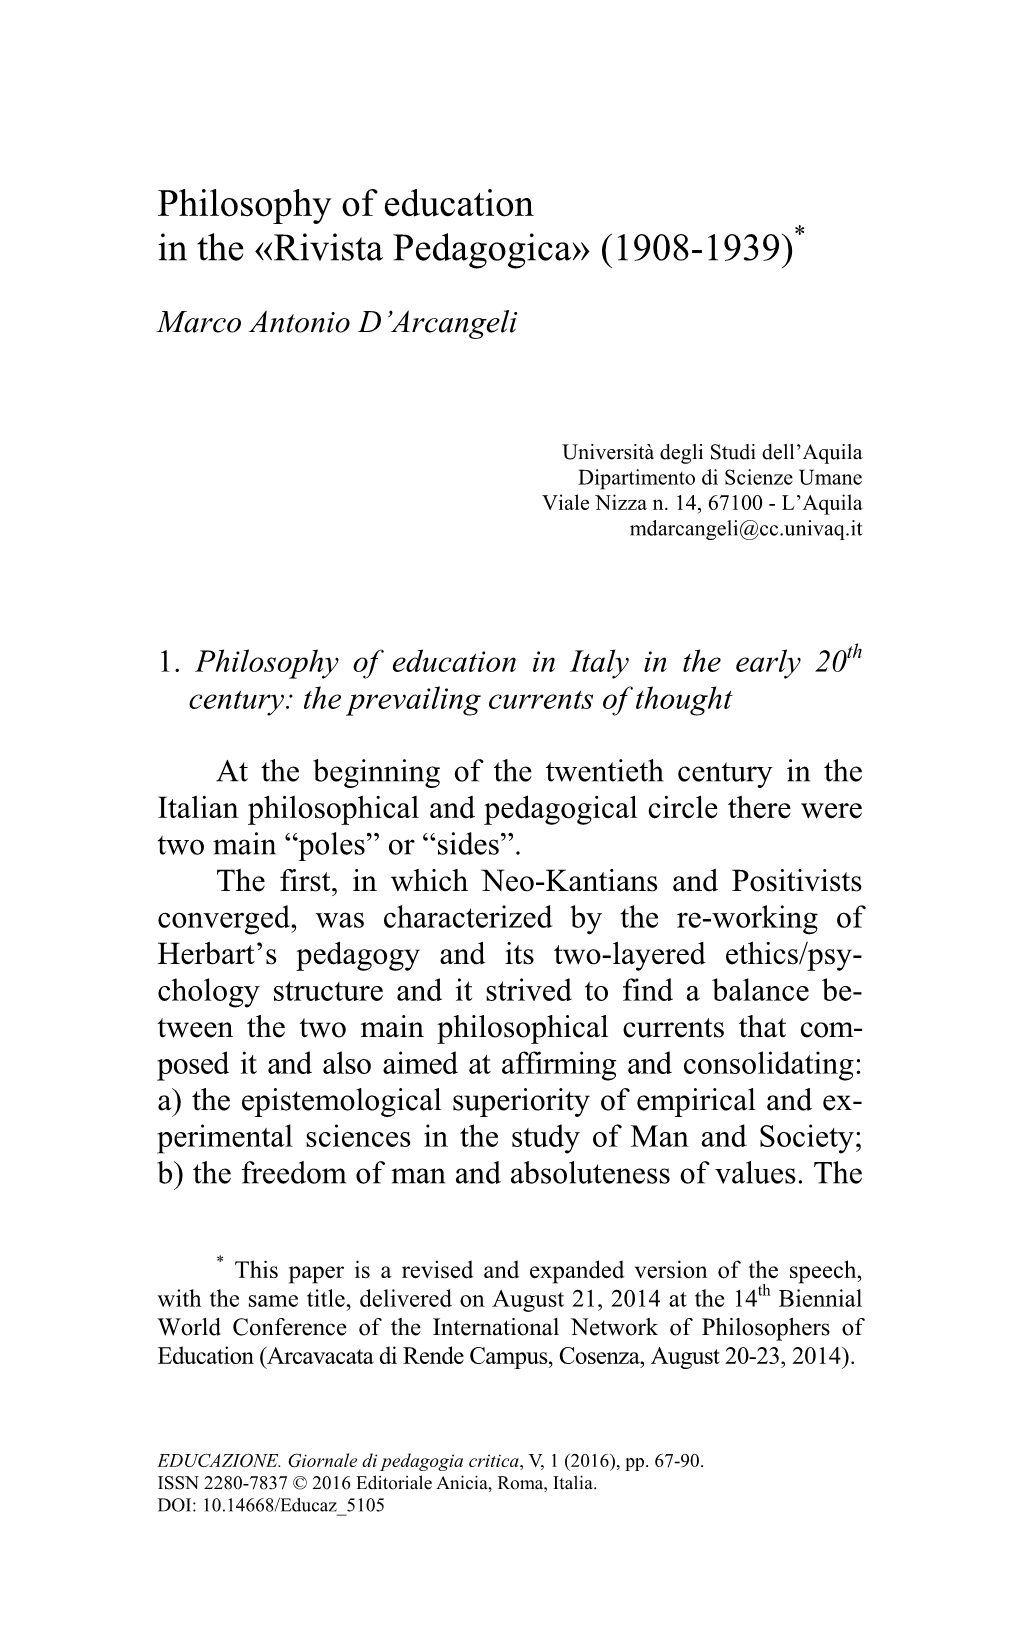 Philosophy of Education in the «Rivista Pedagogica» (1908-1939)*